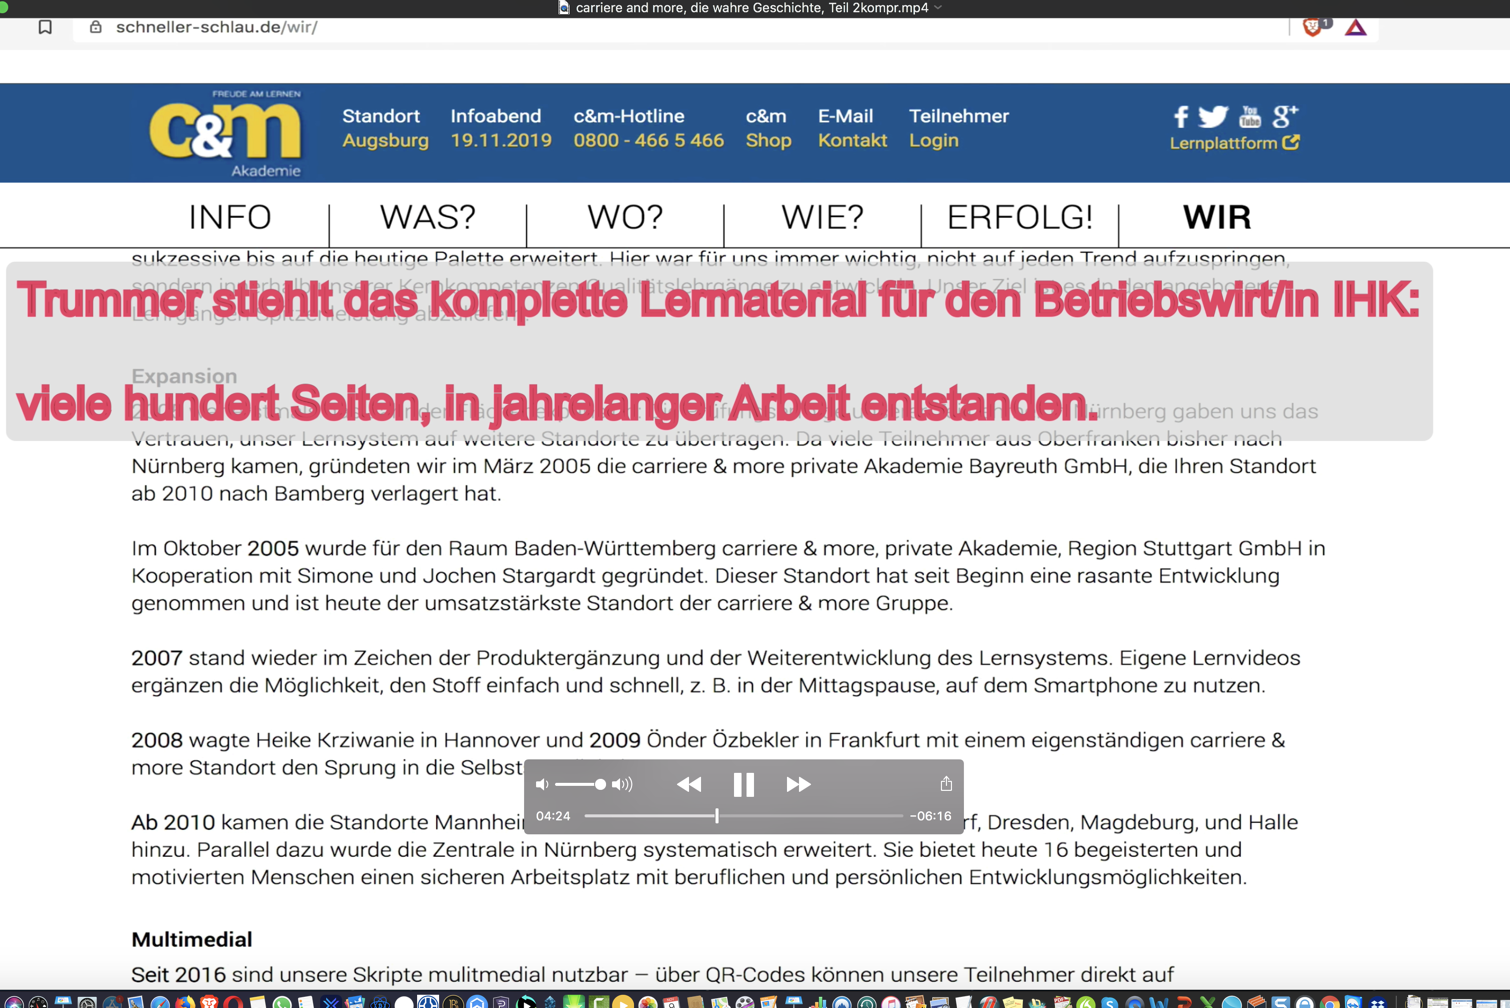 BEWEISE: Walter Trummer lügt u. täuscht, AGB gestohlen